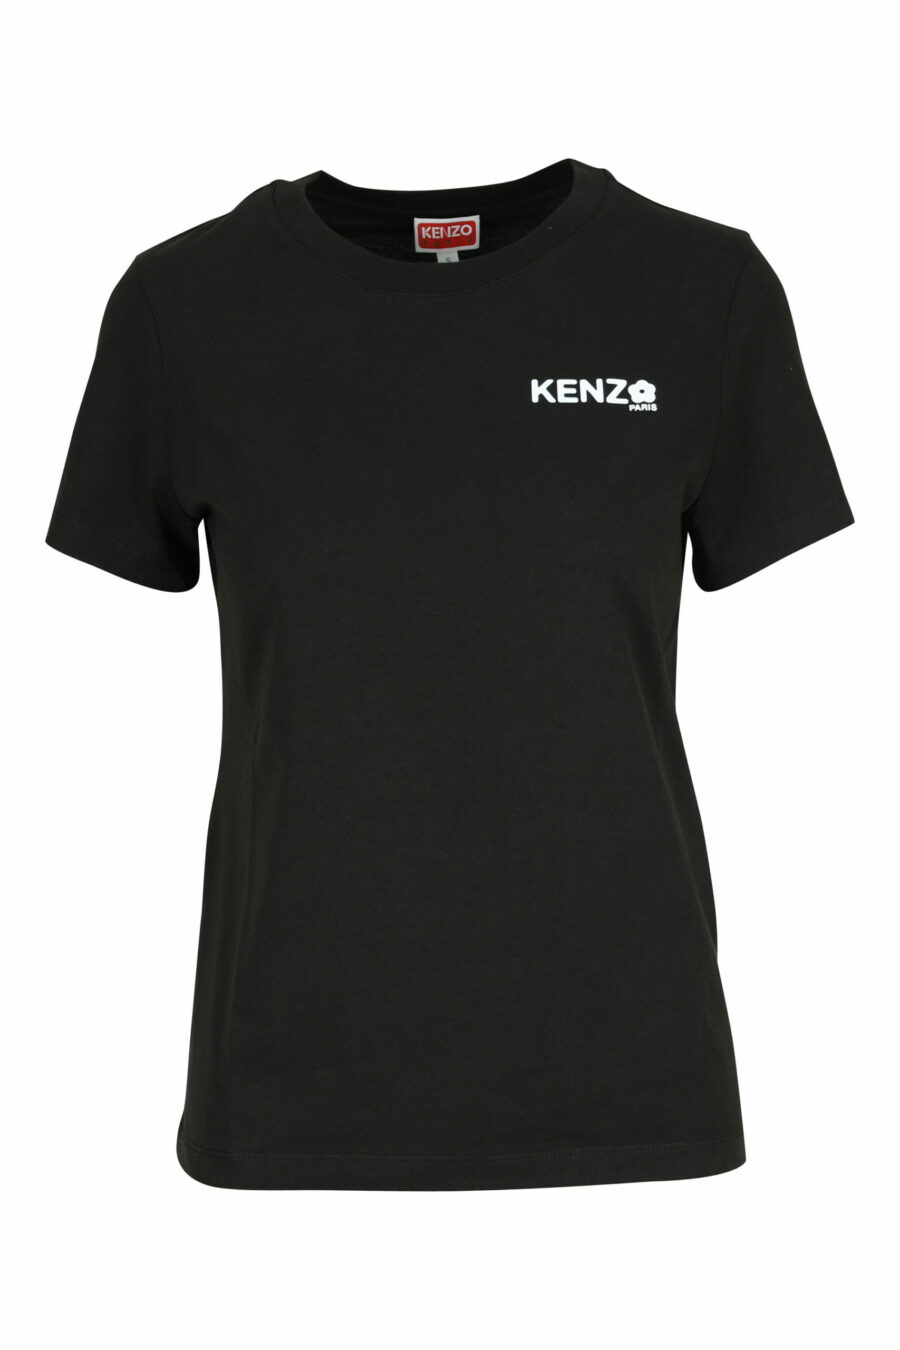 T-shirt noir avec mini logo "kenzo boke flower" blanc - 3612230587762